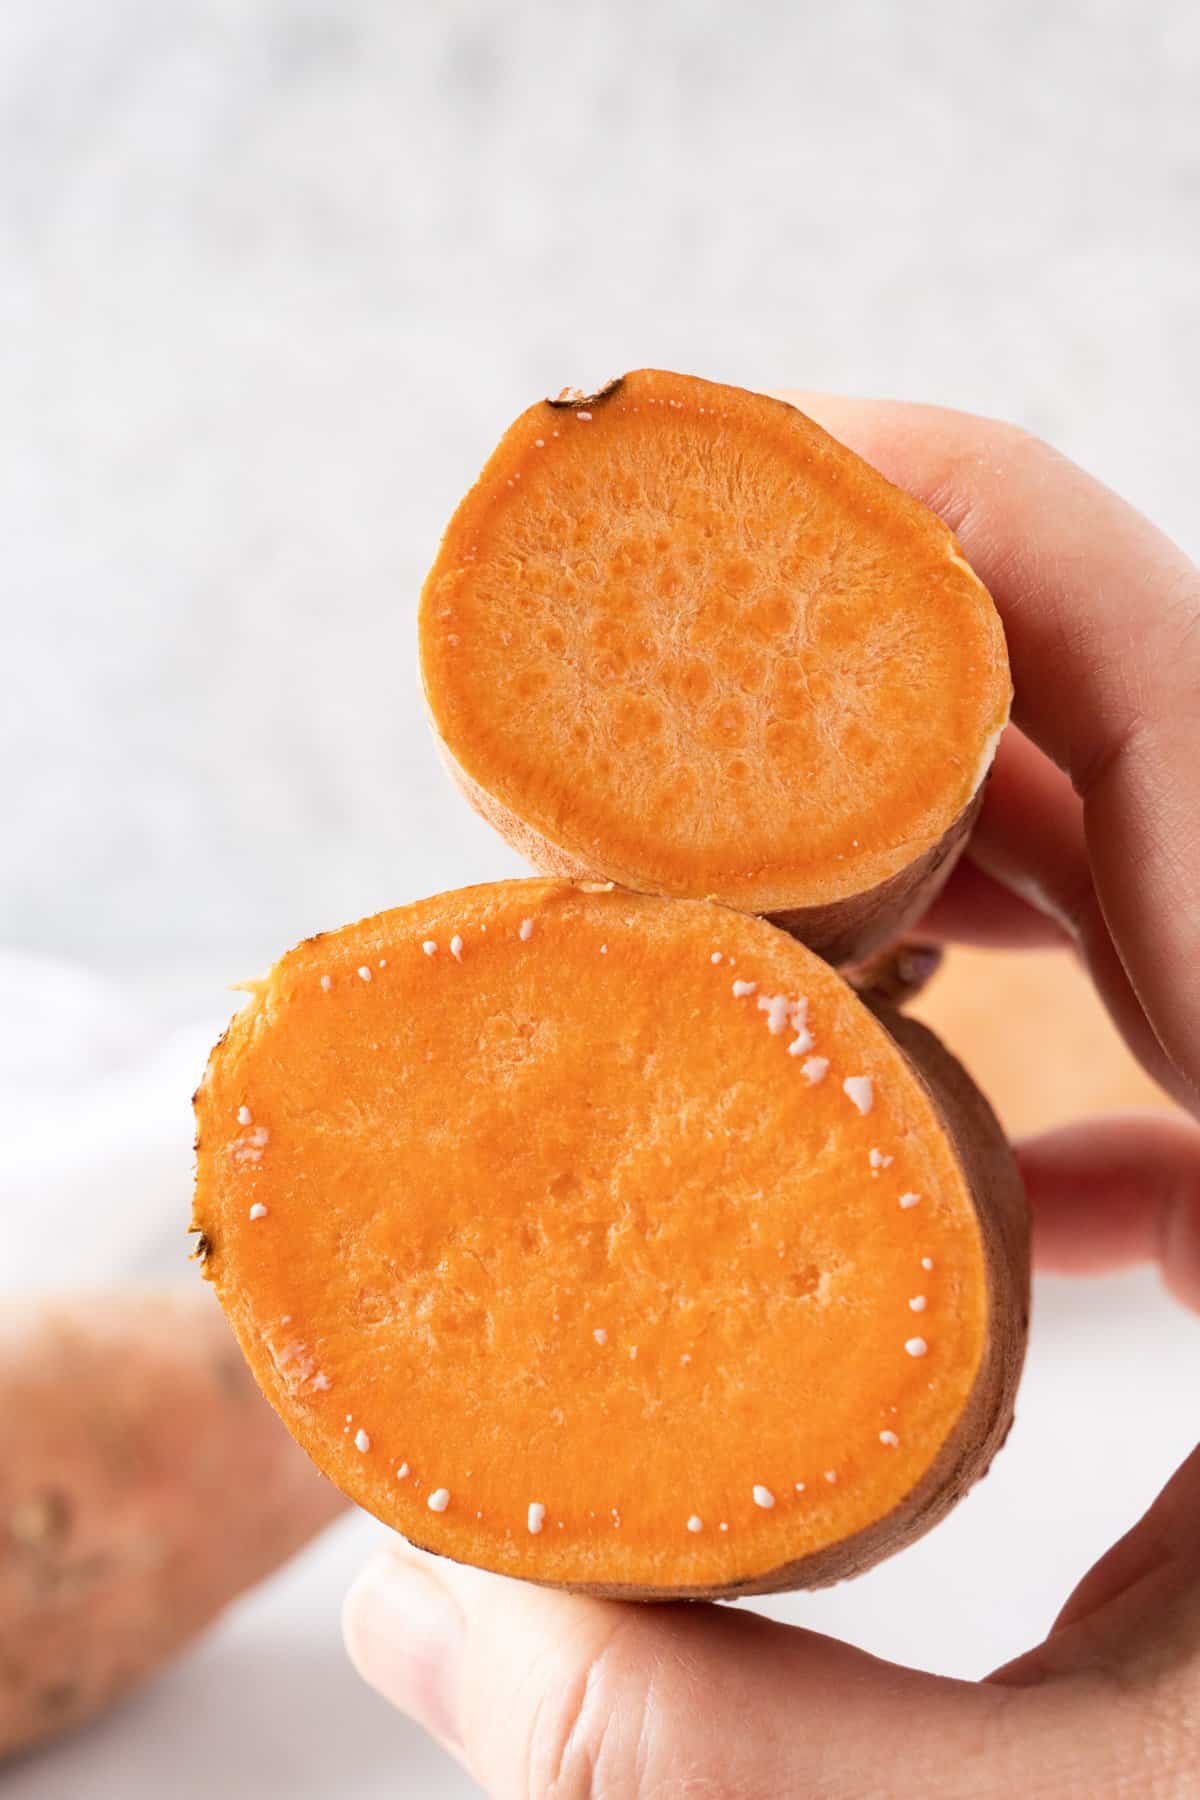 fresh sweet potato vs old sweet potato - cut in to